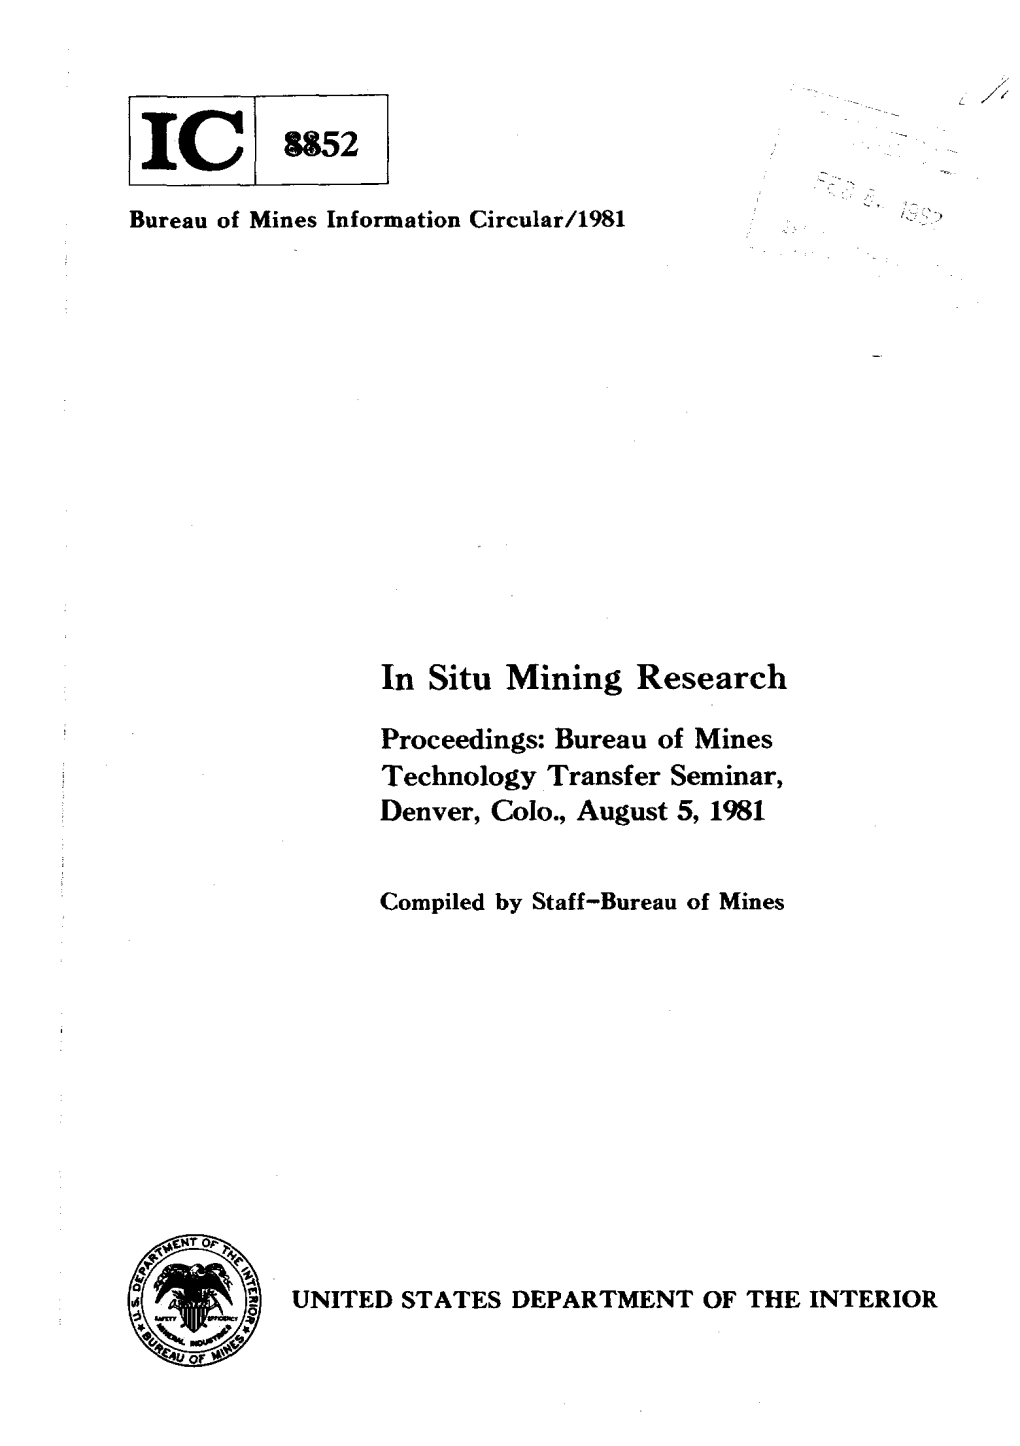 In Situ Mining Research Proceedings: Bureau of Mines Technology Transfer Seminar, Denver, Colo., August 5, 1981